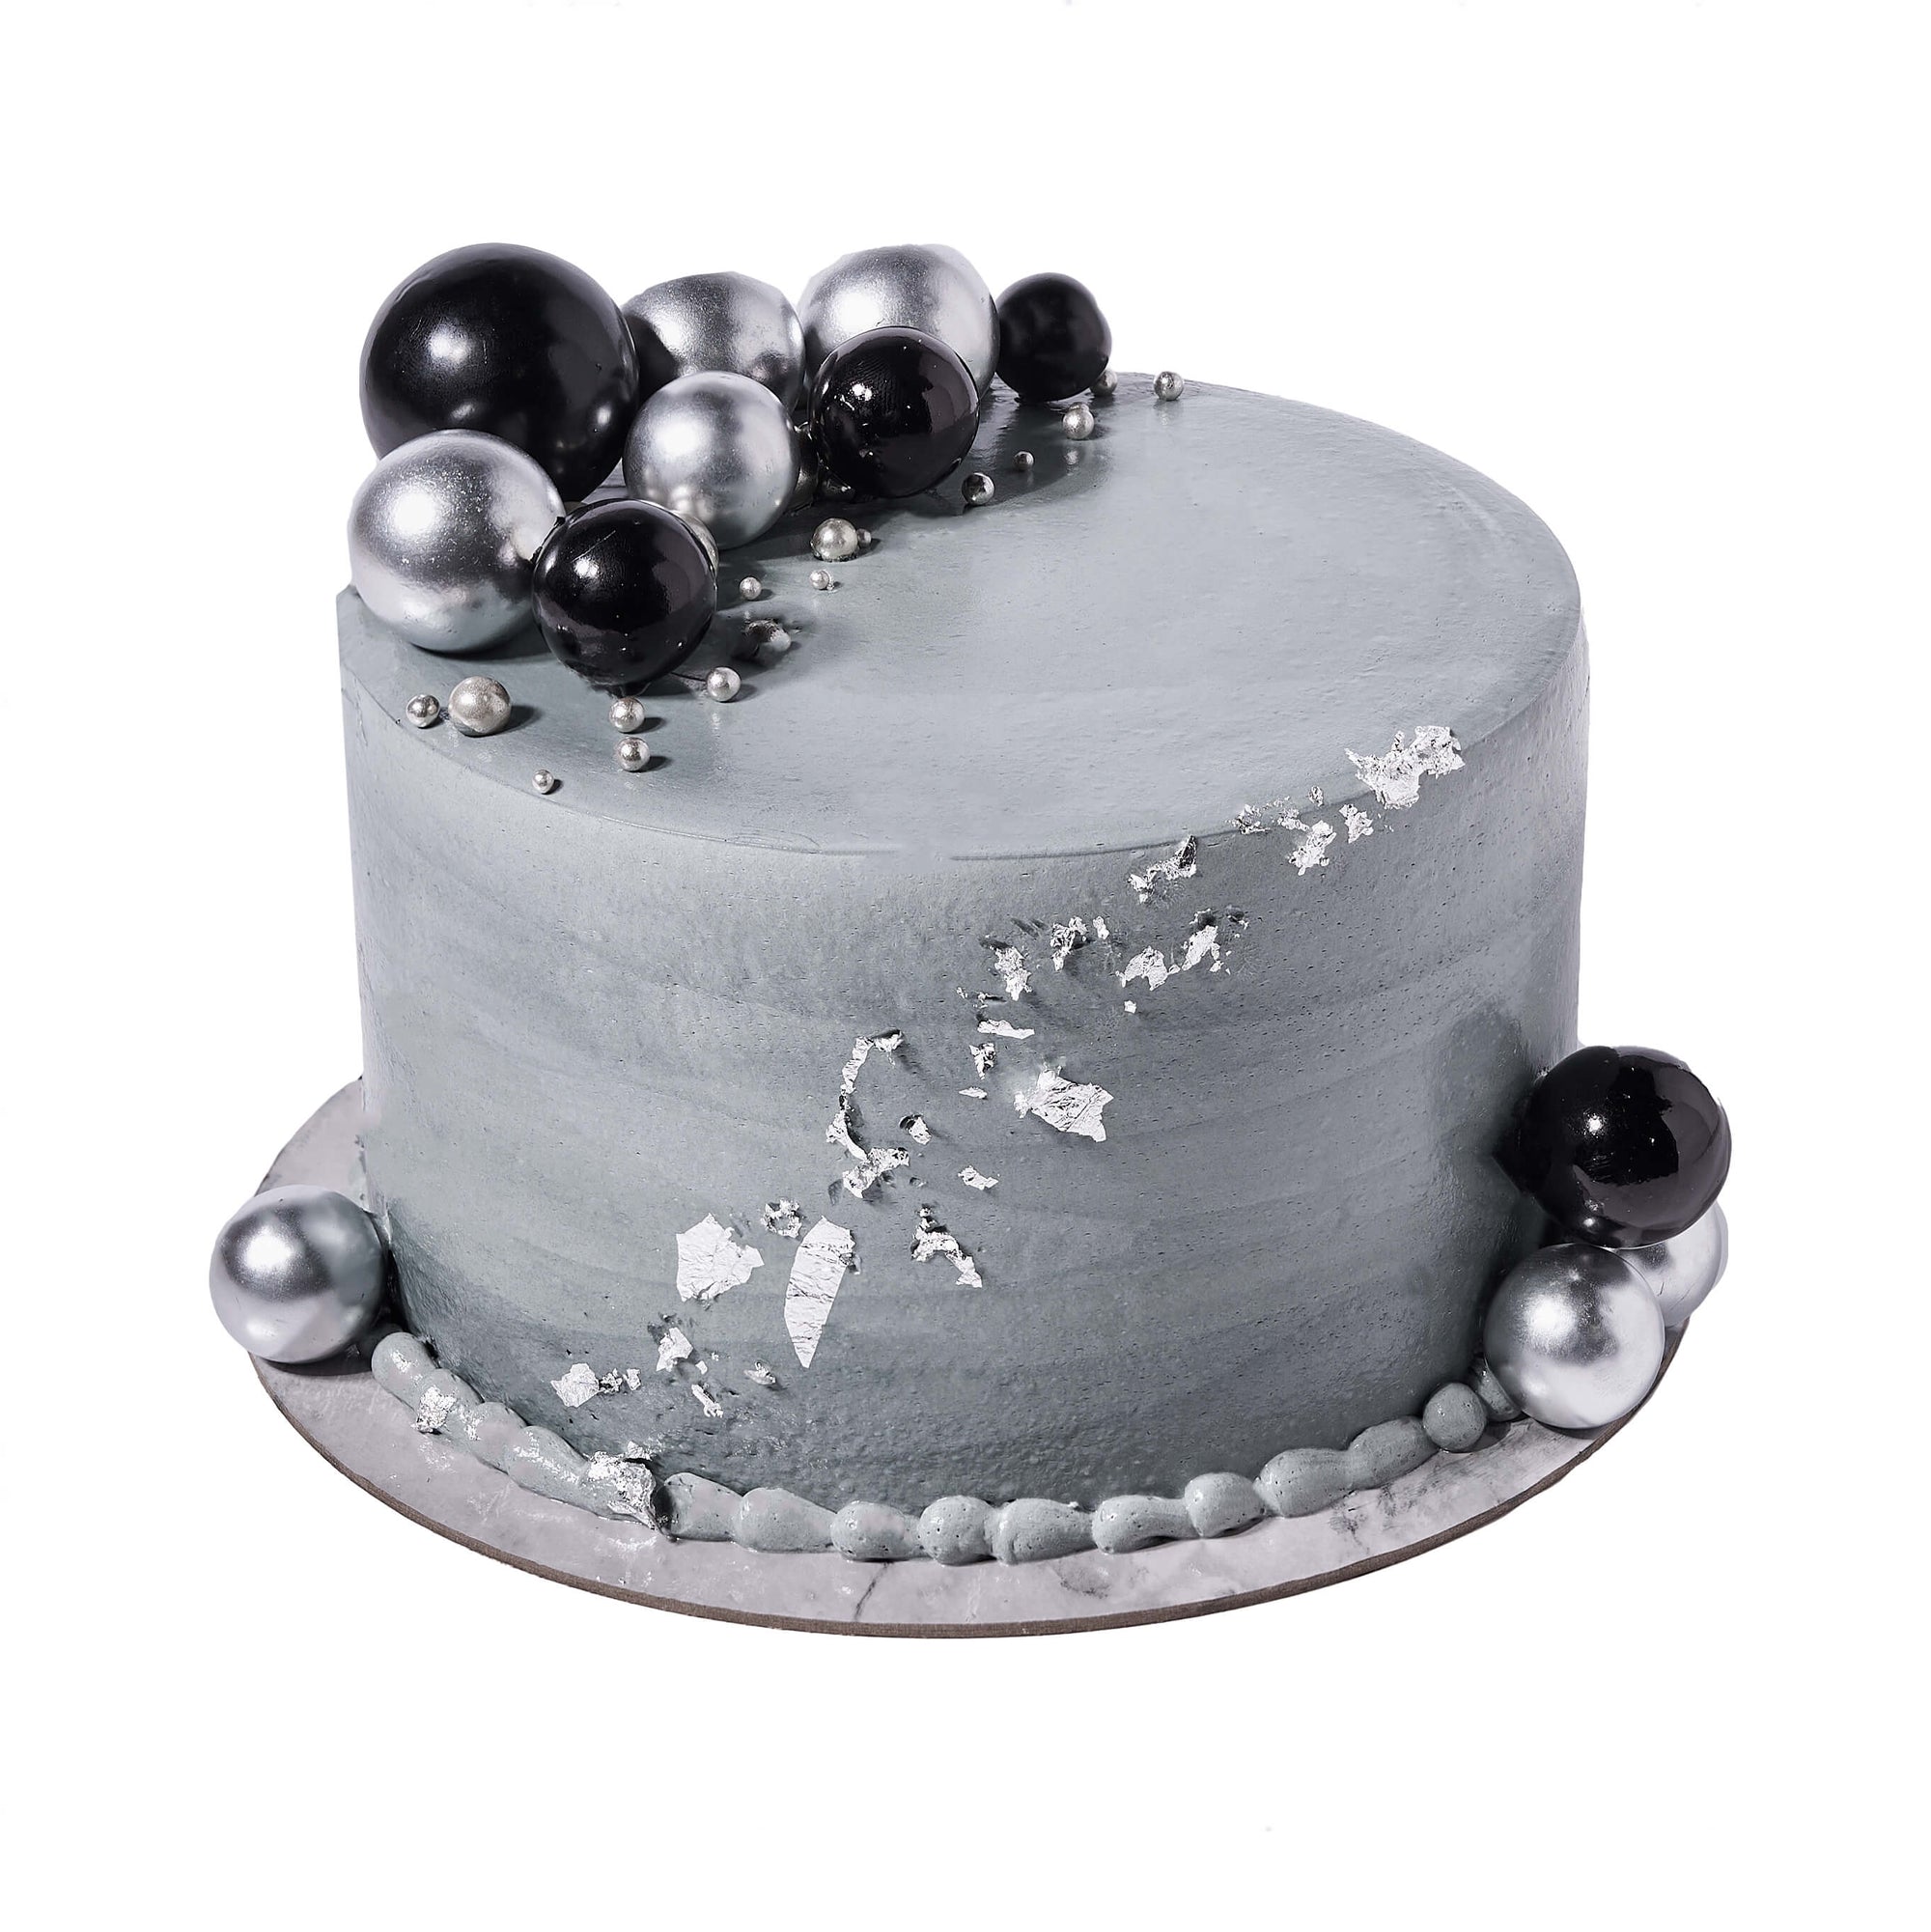 CONGRATULATIONS CAKE - Decorated Cake by wisha's cakes - CakesDecor